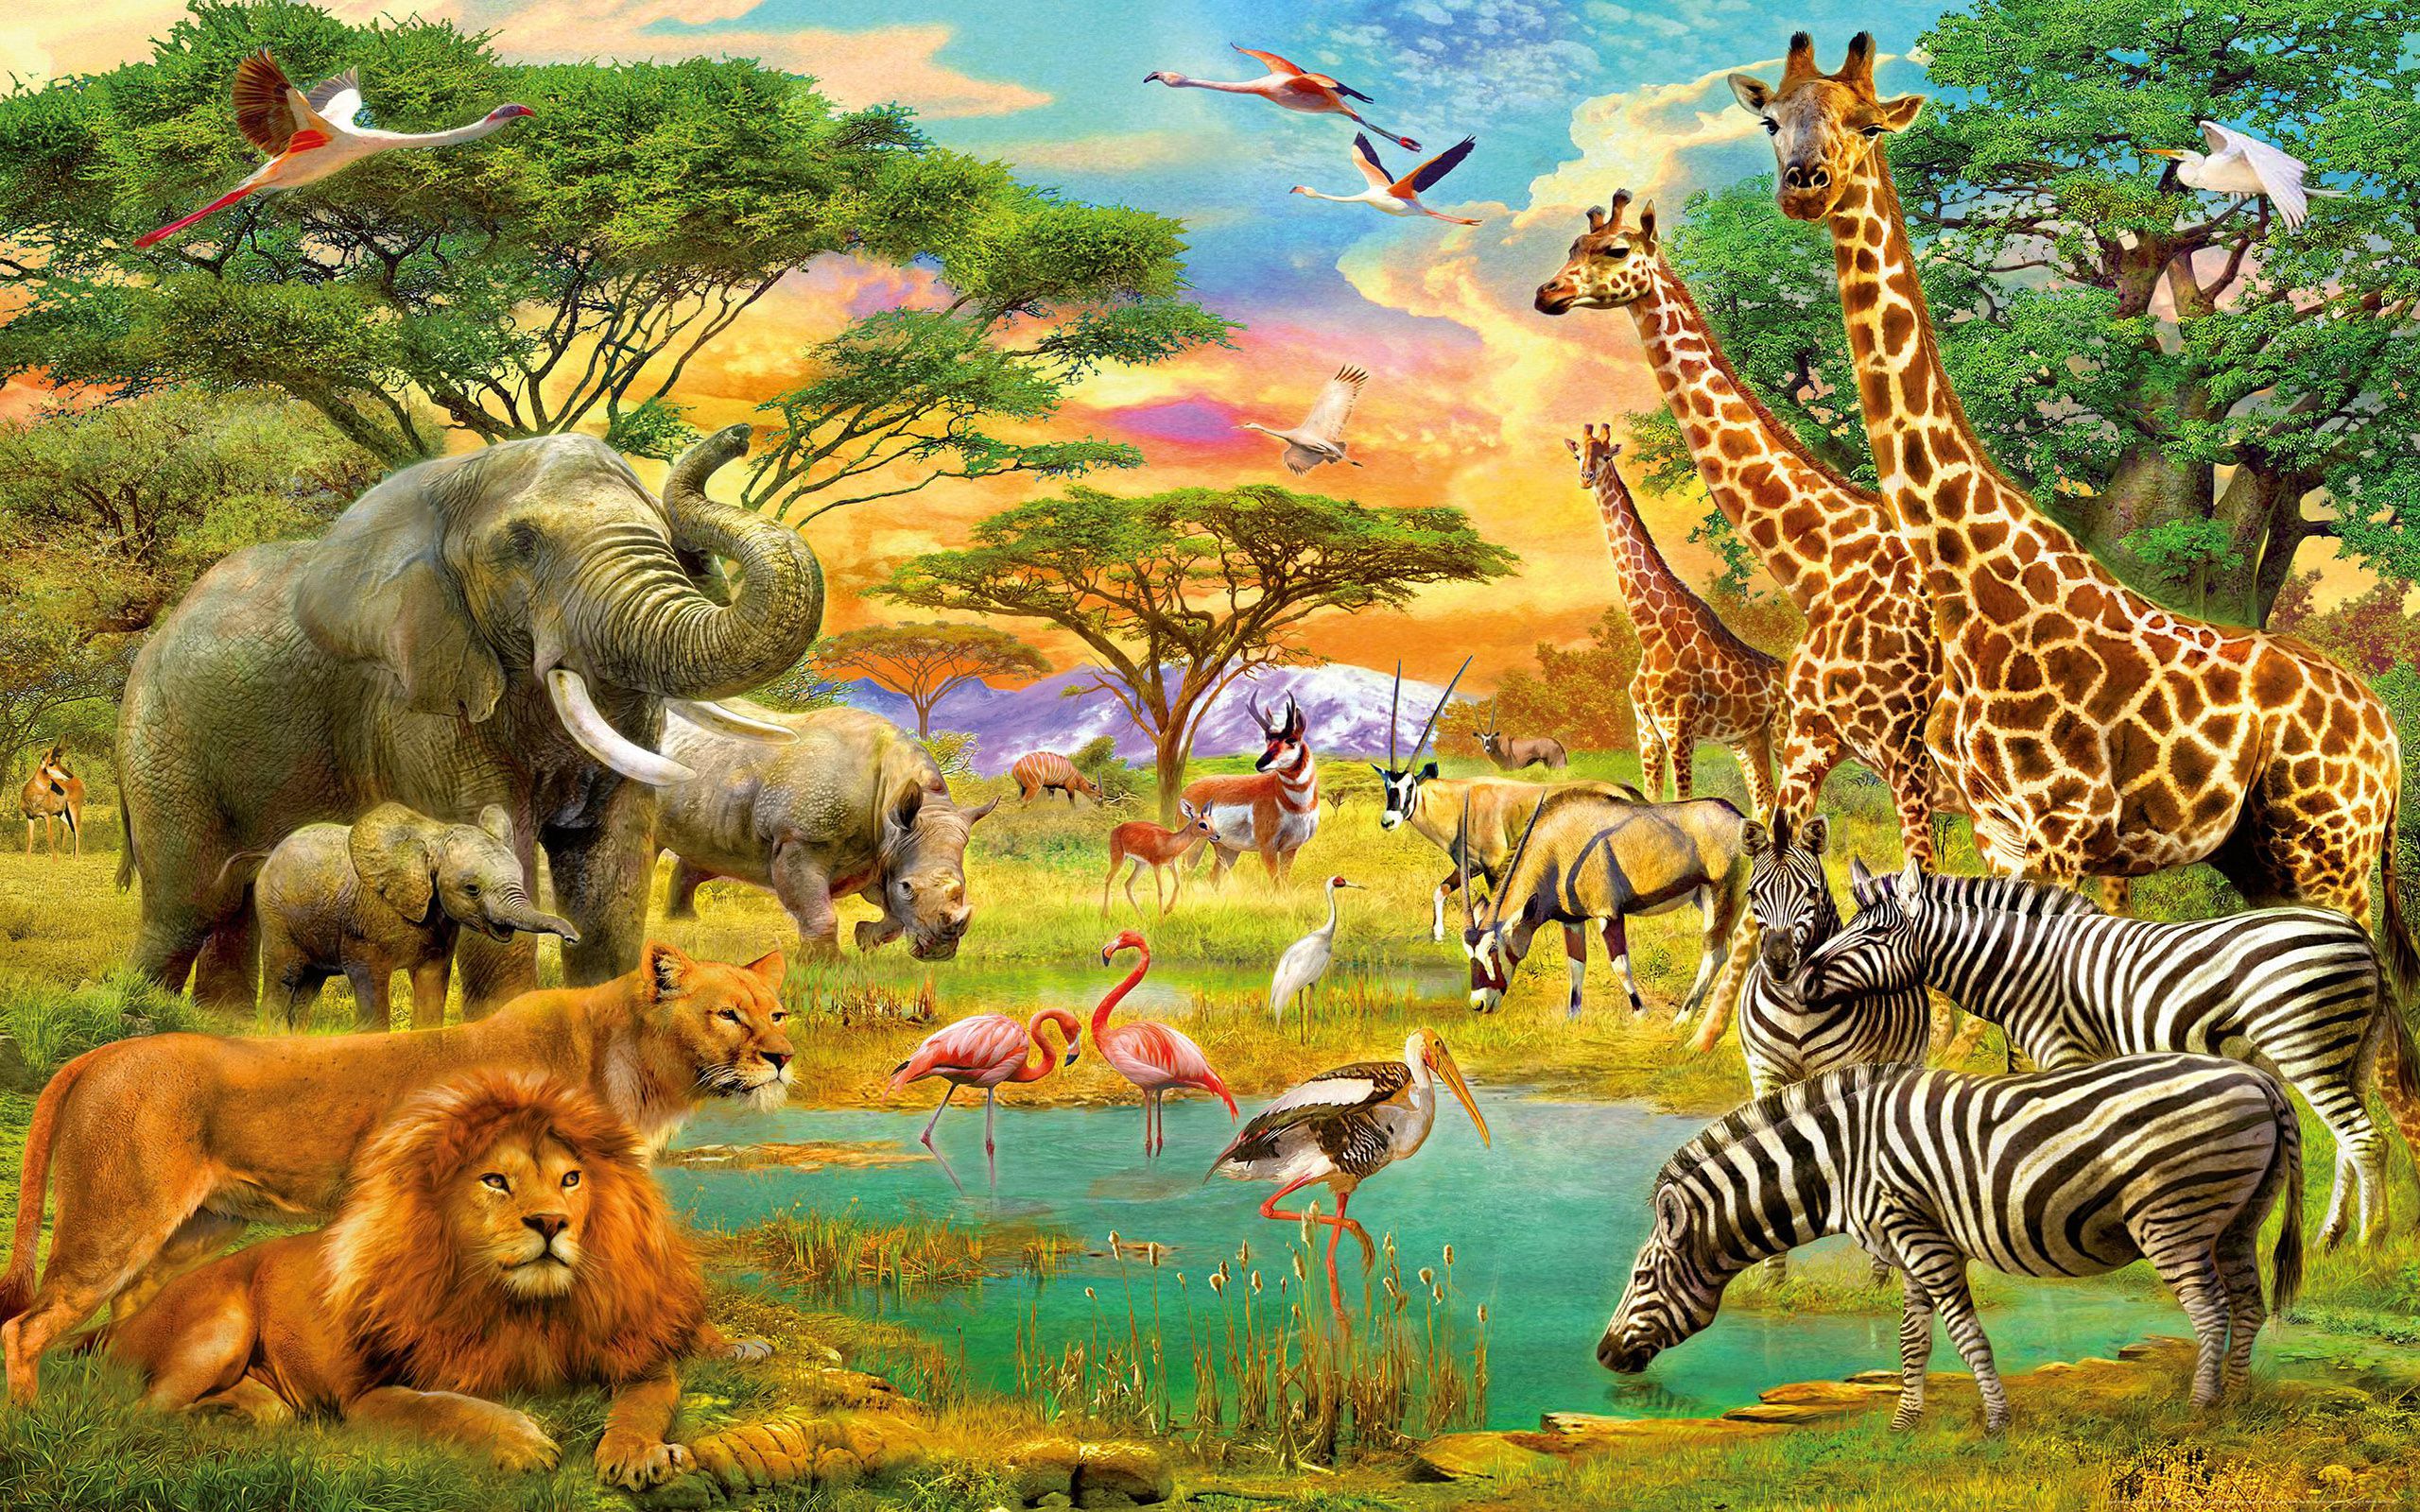 Wallpapers African animals version 2 giraffe on the desktop